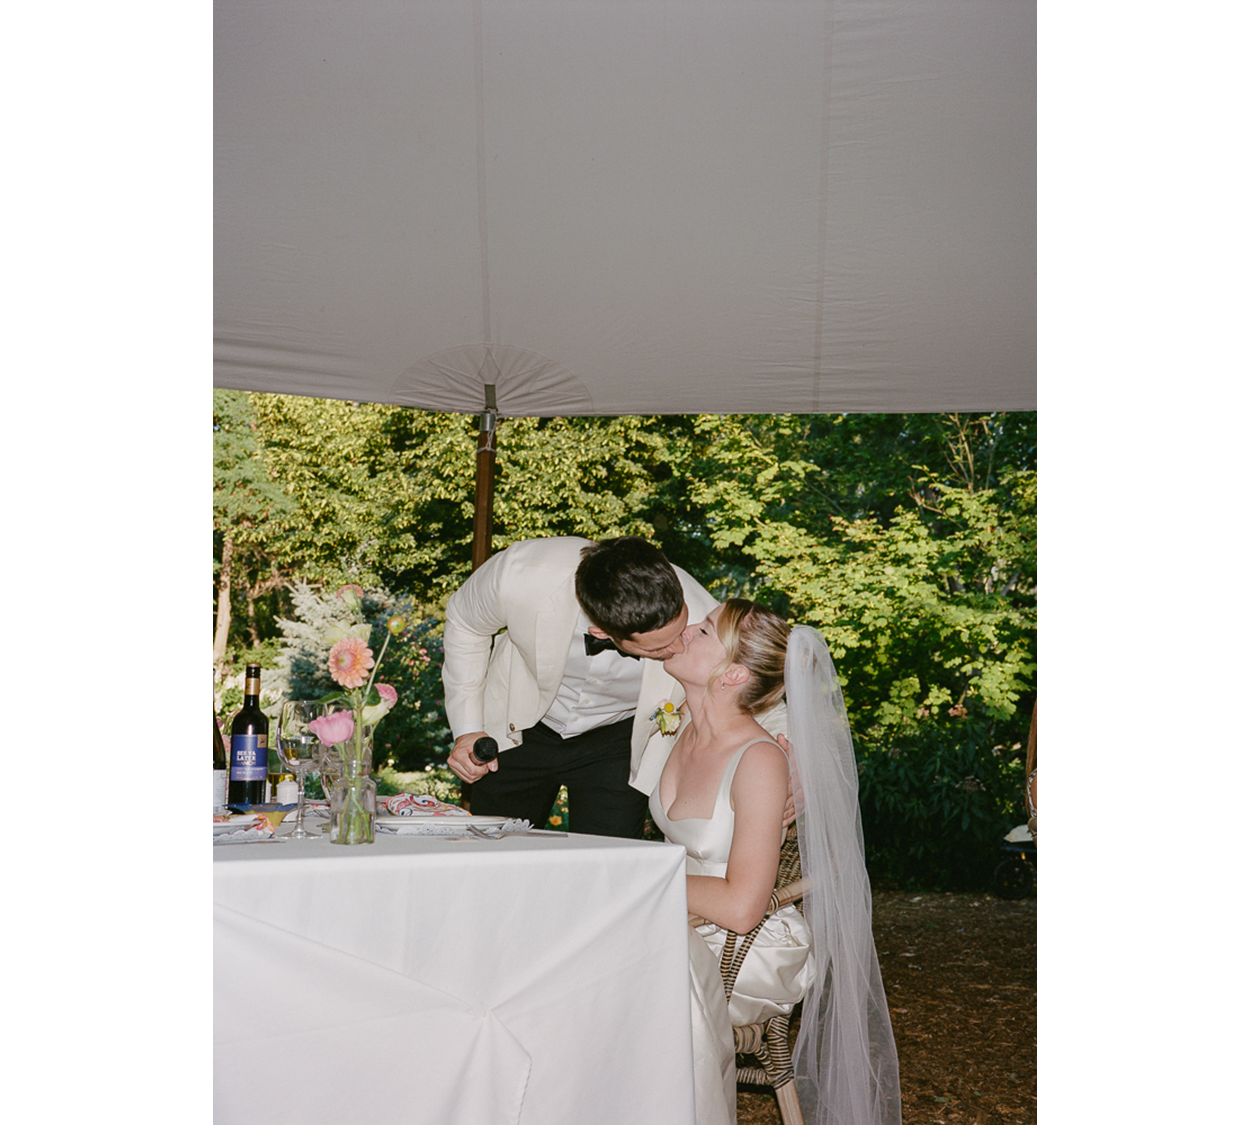 Linden-Gardens-Wedding-Venue-Okanagan-Penticton-Photography-Film-Analog-72.PNG